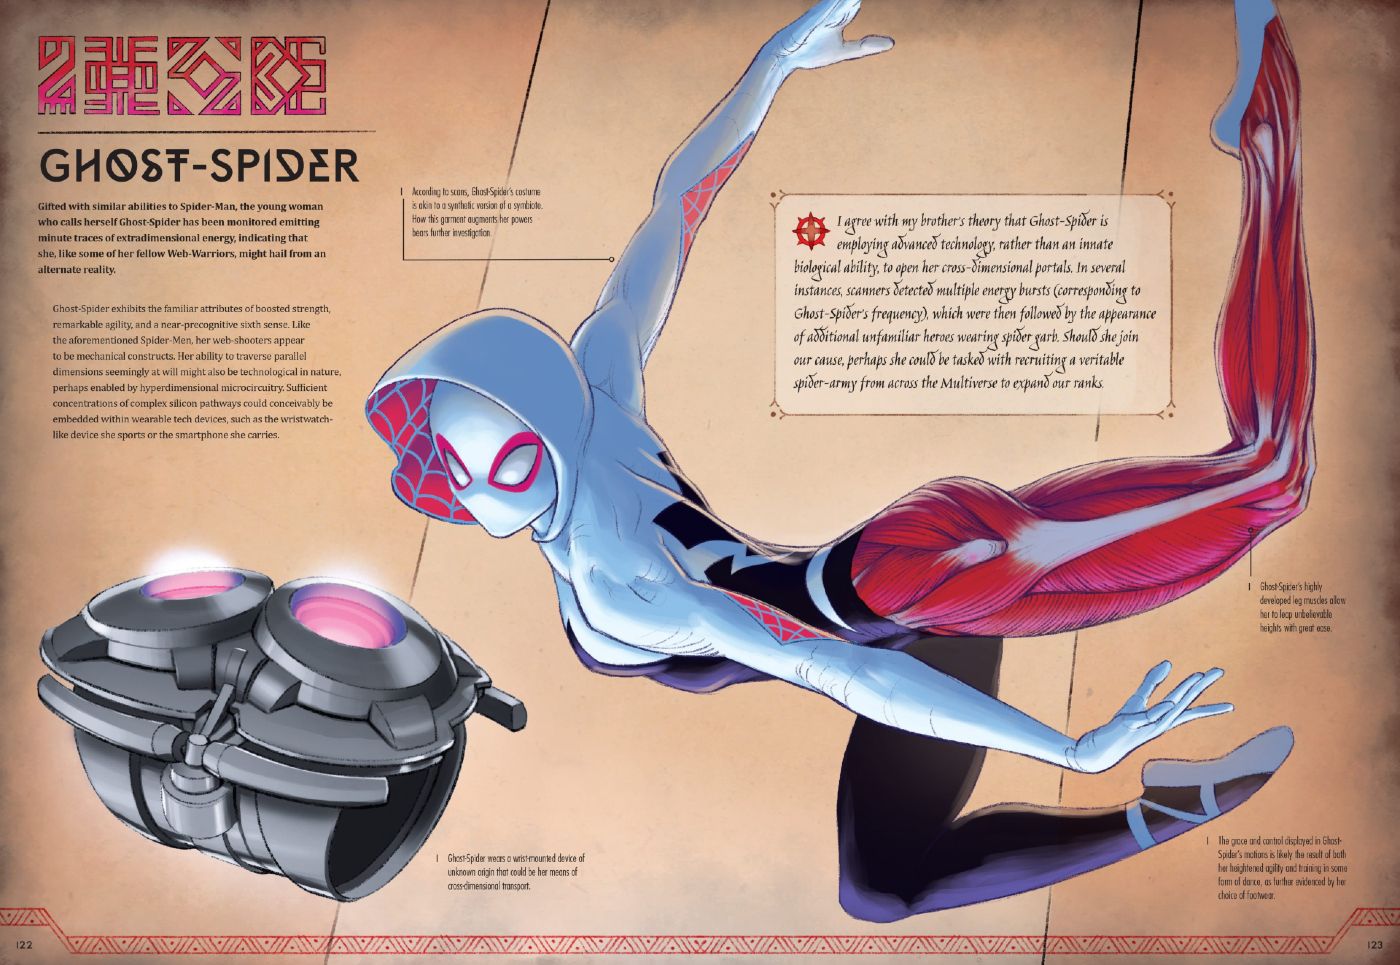 Marvel Anatomy: A Scientific Study of Superhuman Ghost Spider Anatomy